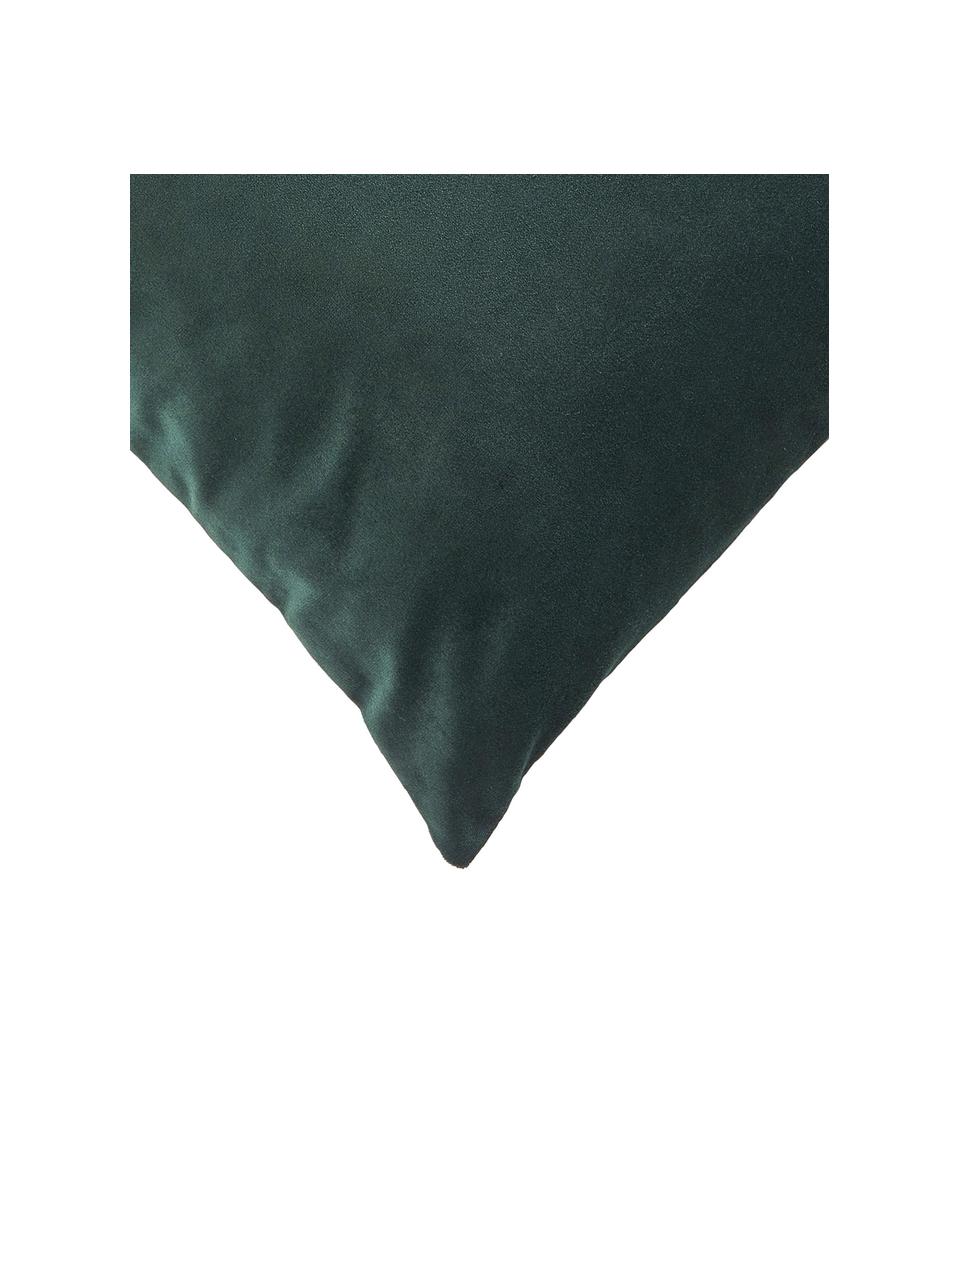 Fluwelen kussenhoezen Rush, 2 stuks, 100% gerecycled polyester, Donkergroen, B 45 x L 45 cm